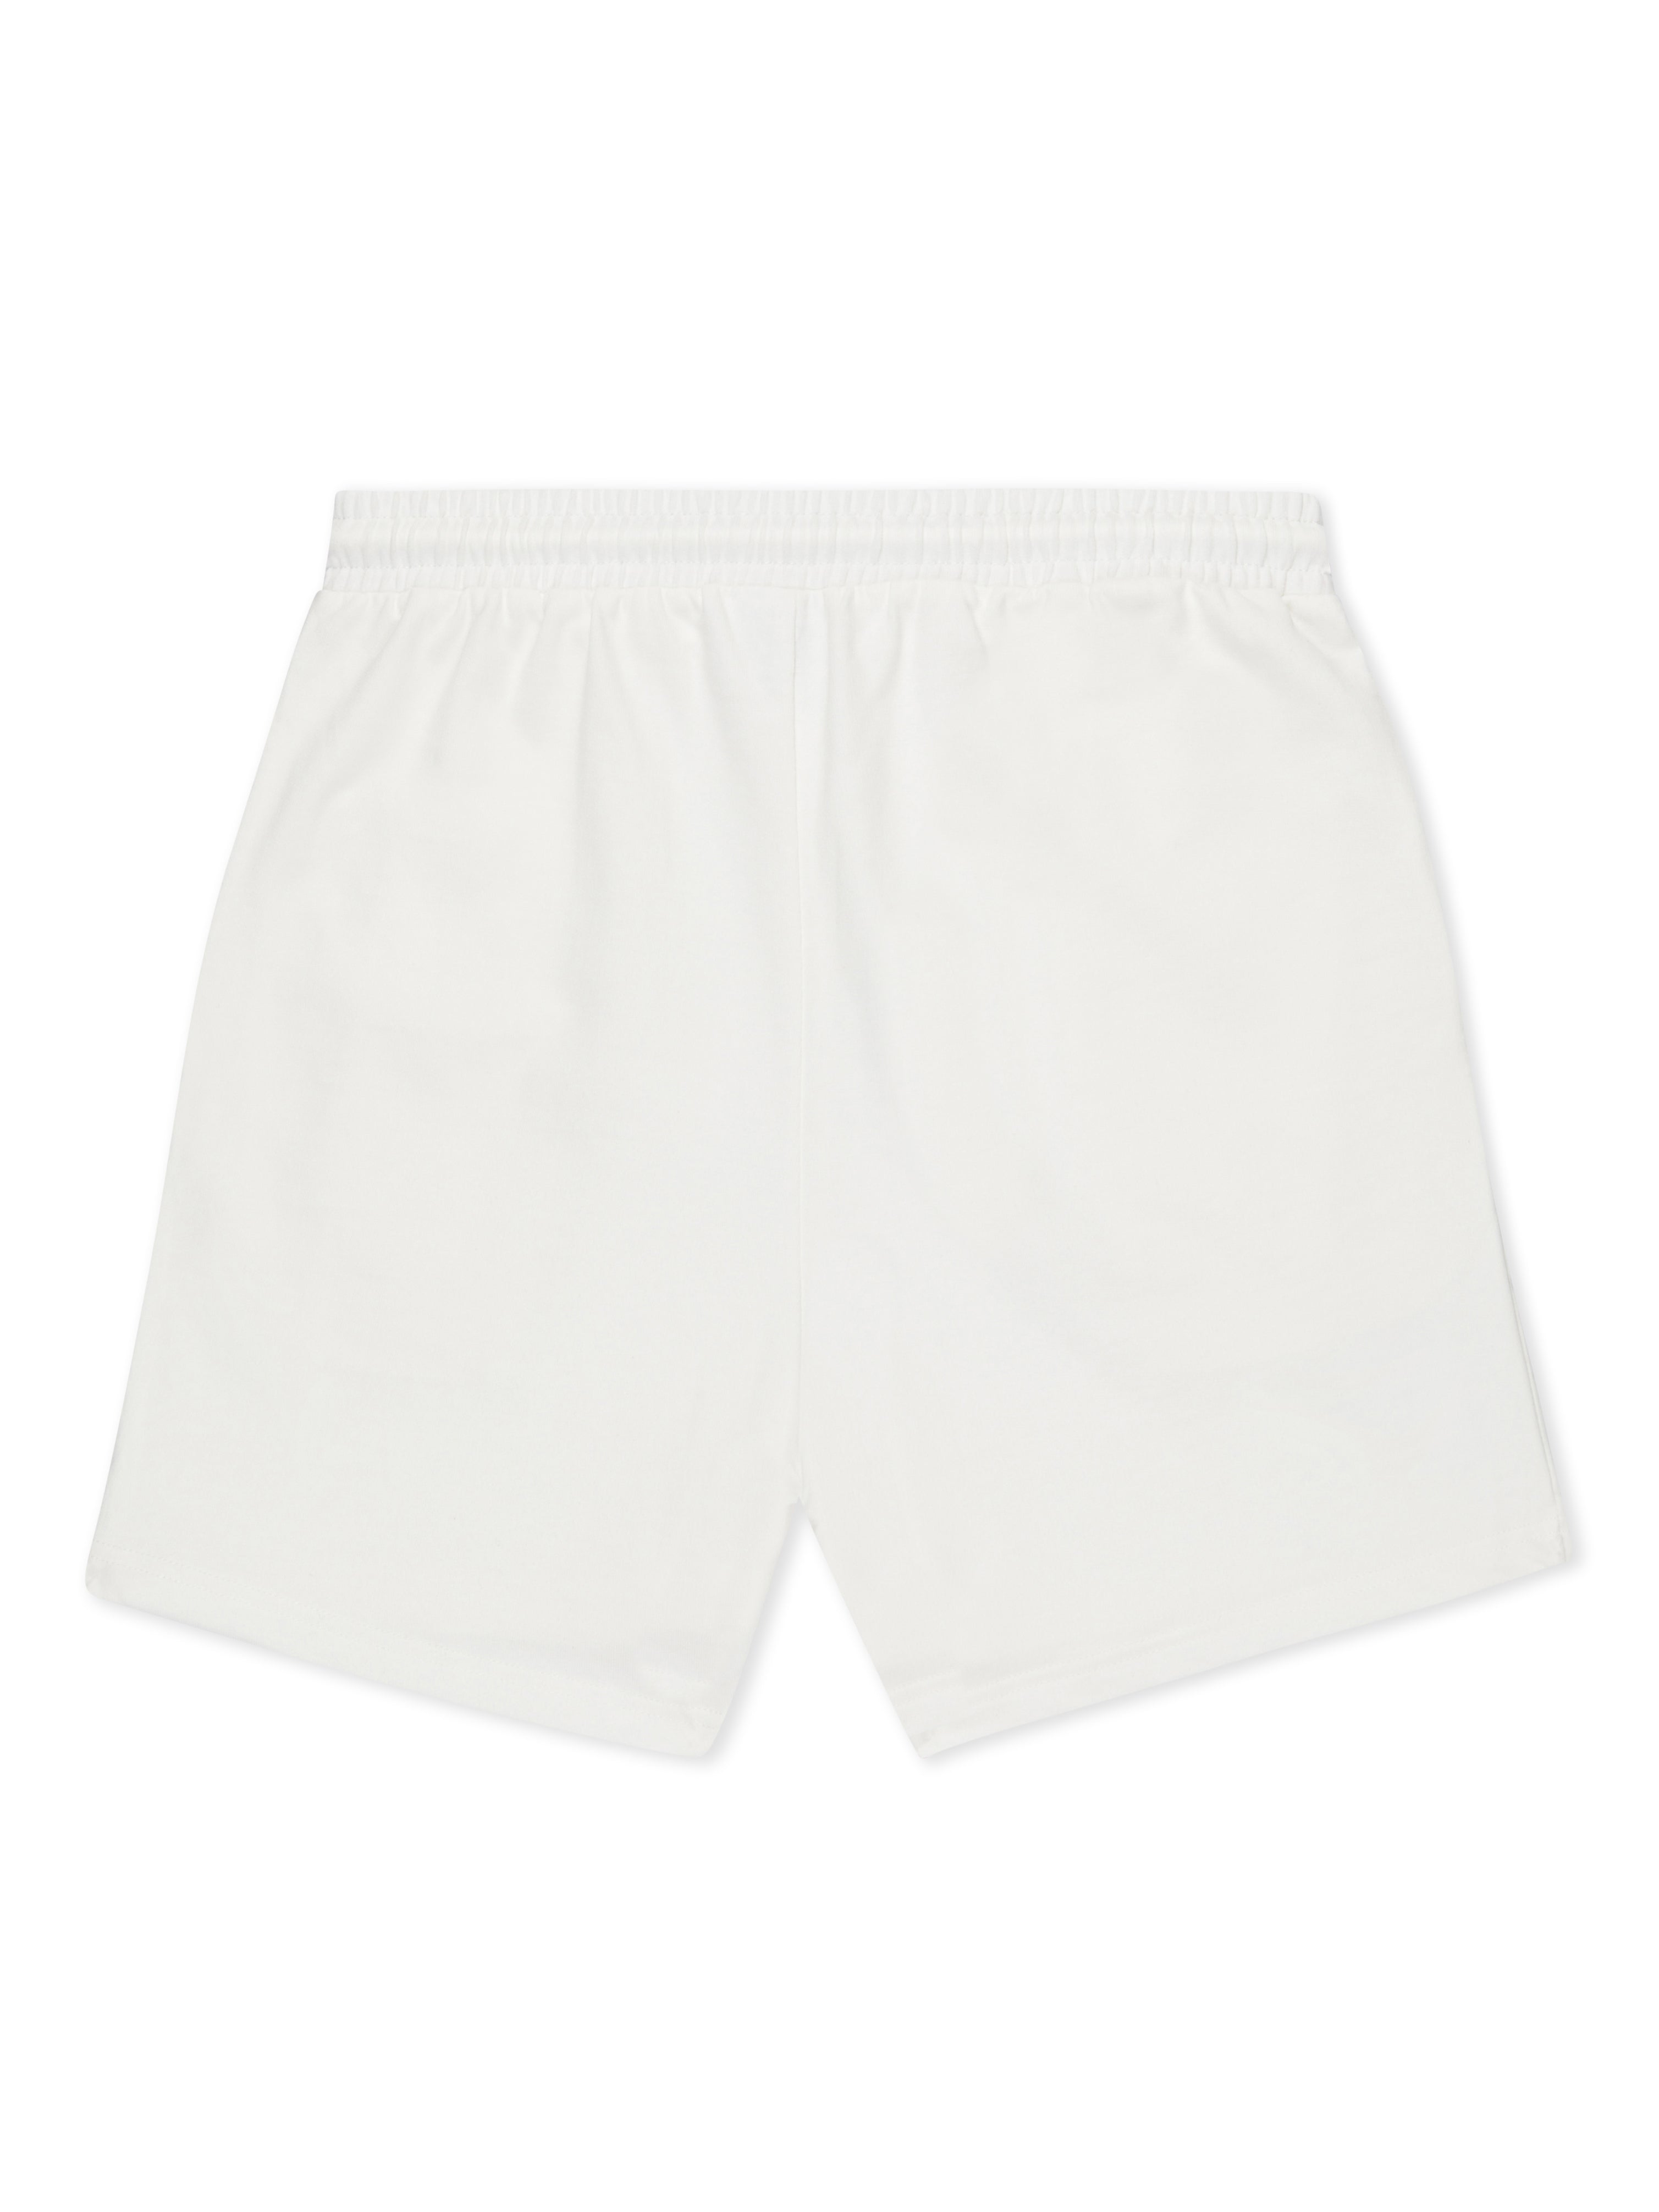 back of mens white retro cotton training shorts